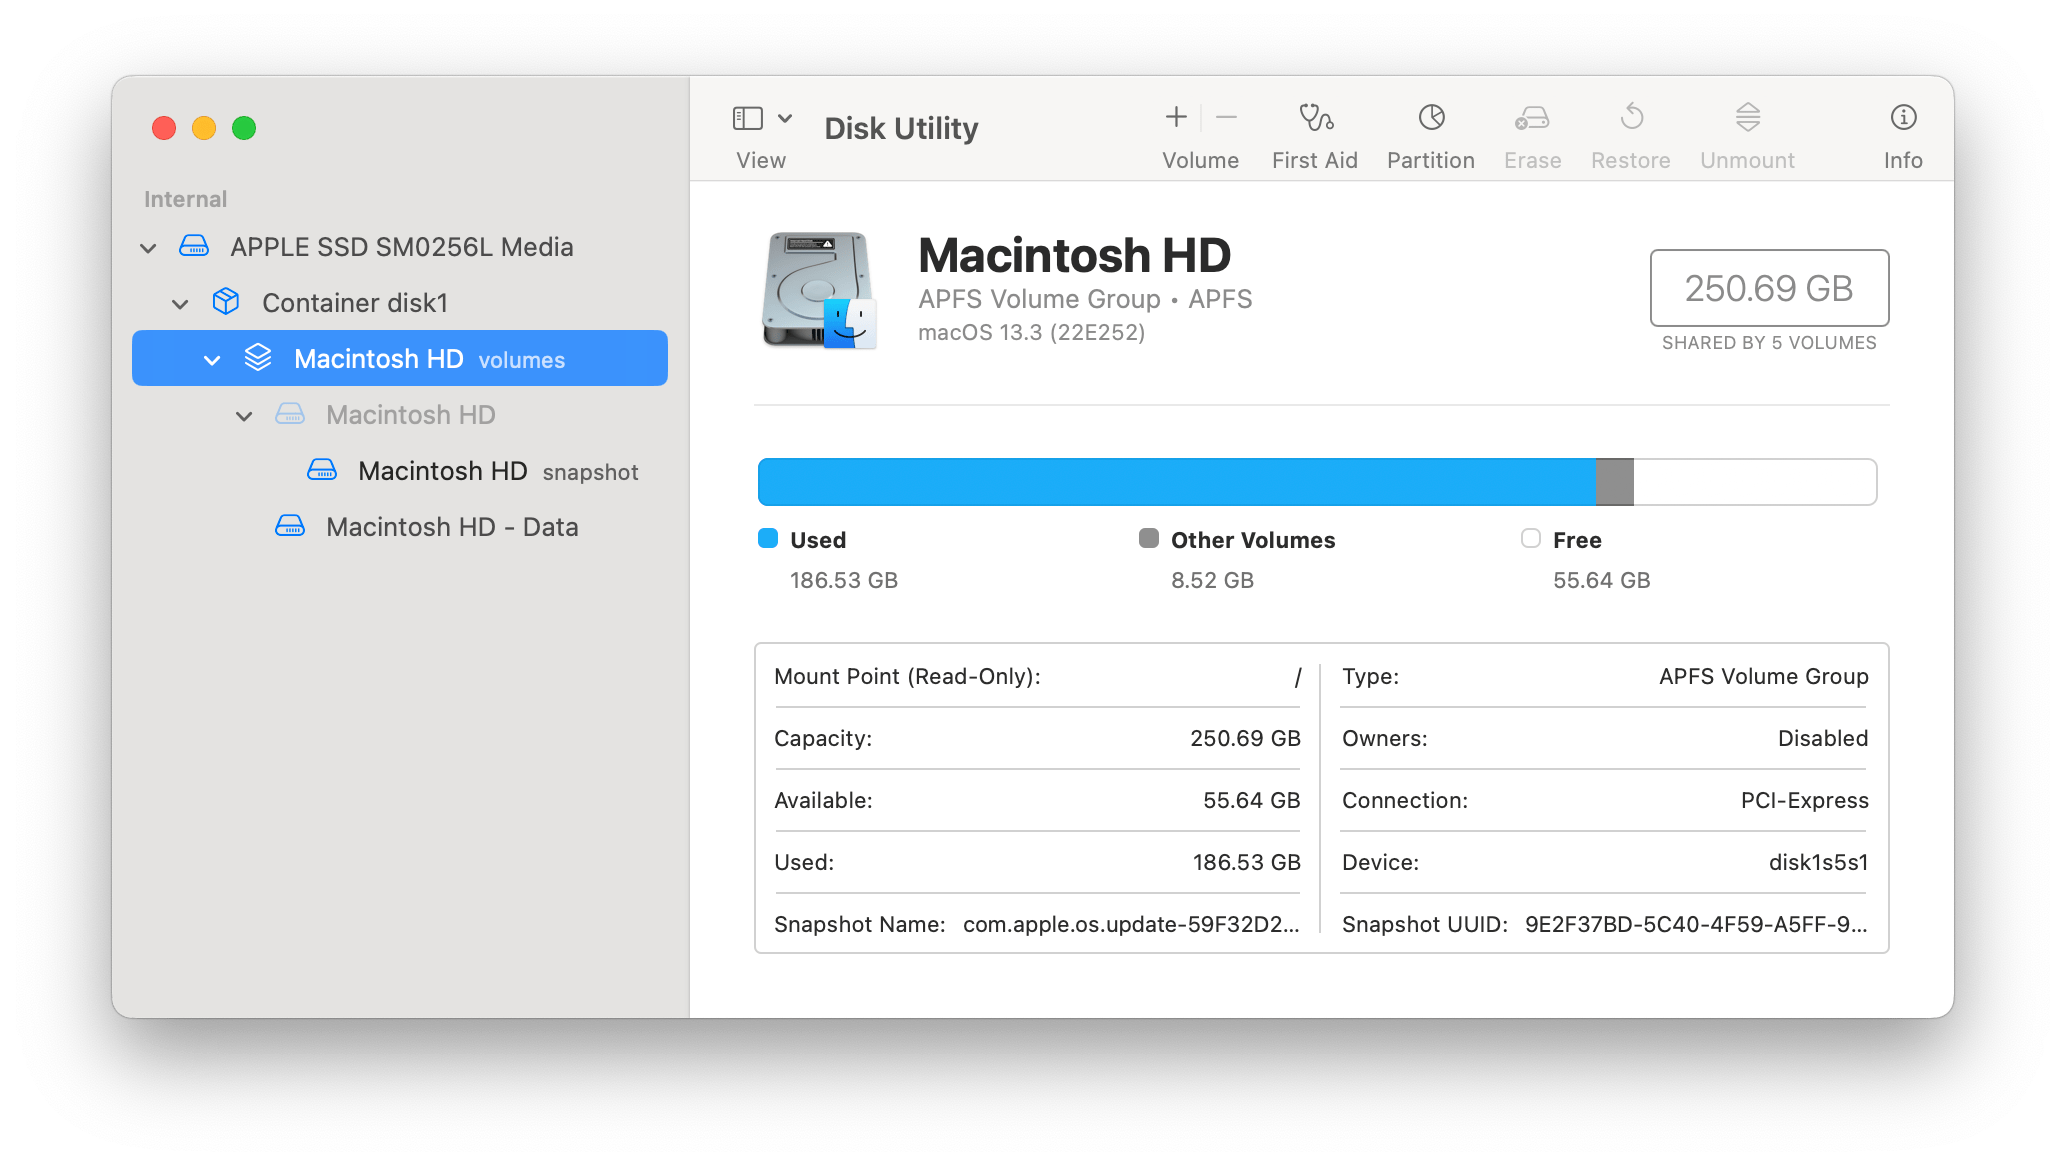 disk utility view of Macintosh HD and Macintosh HD data volumes